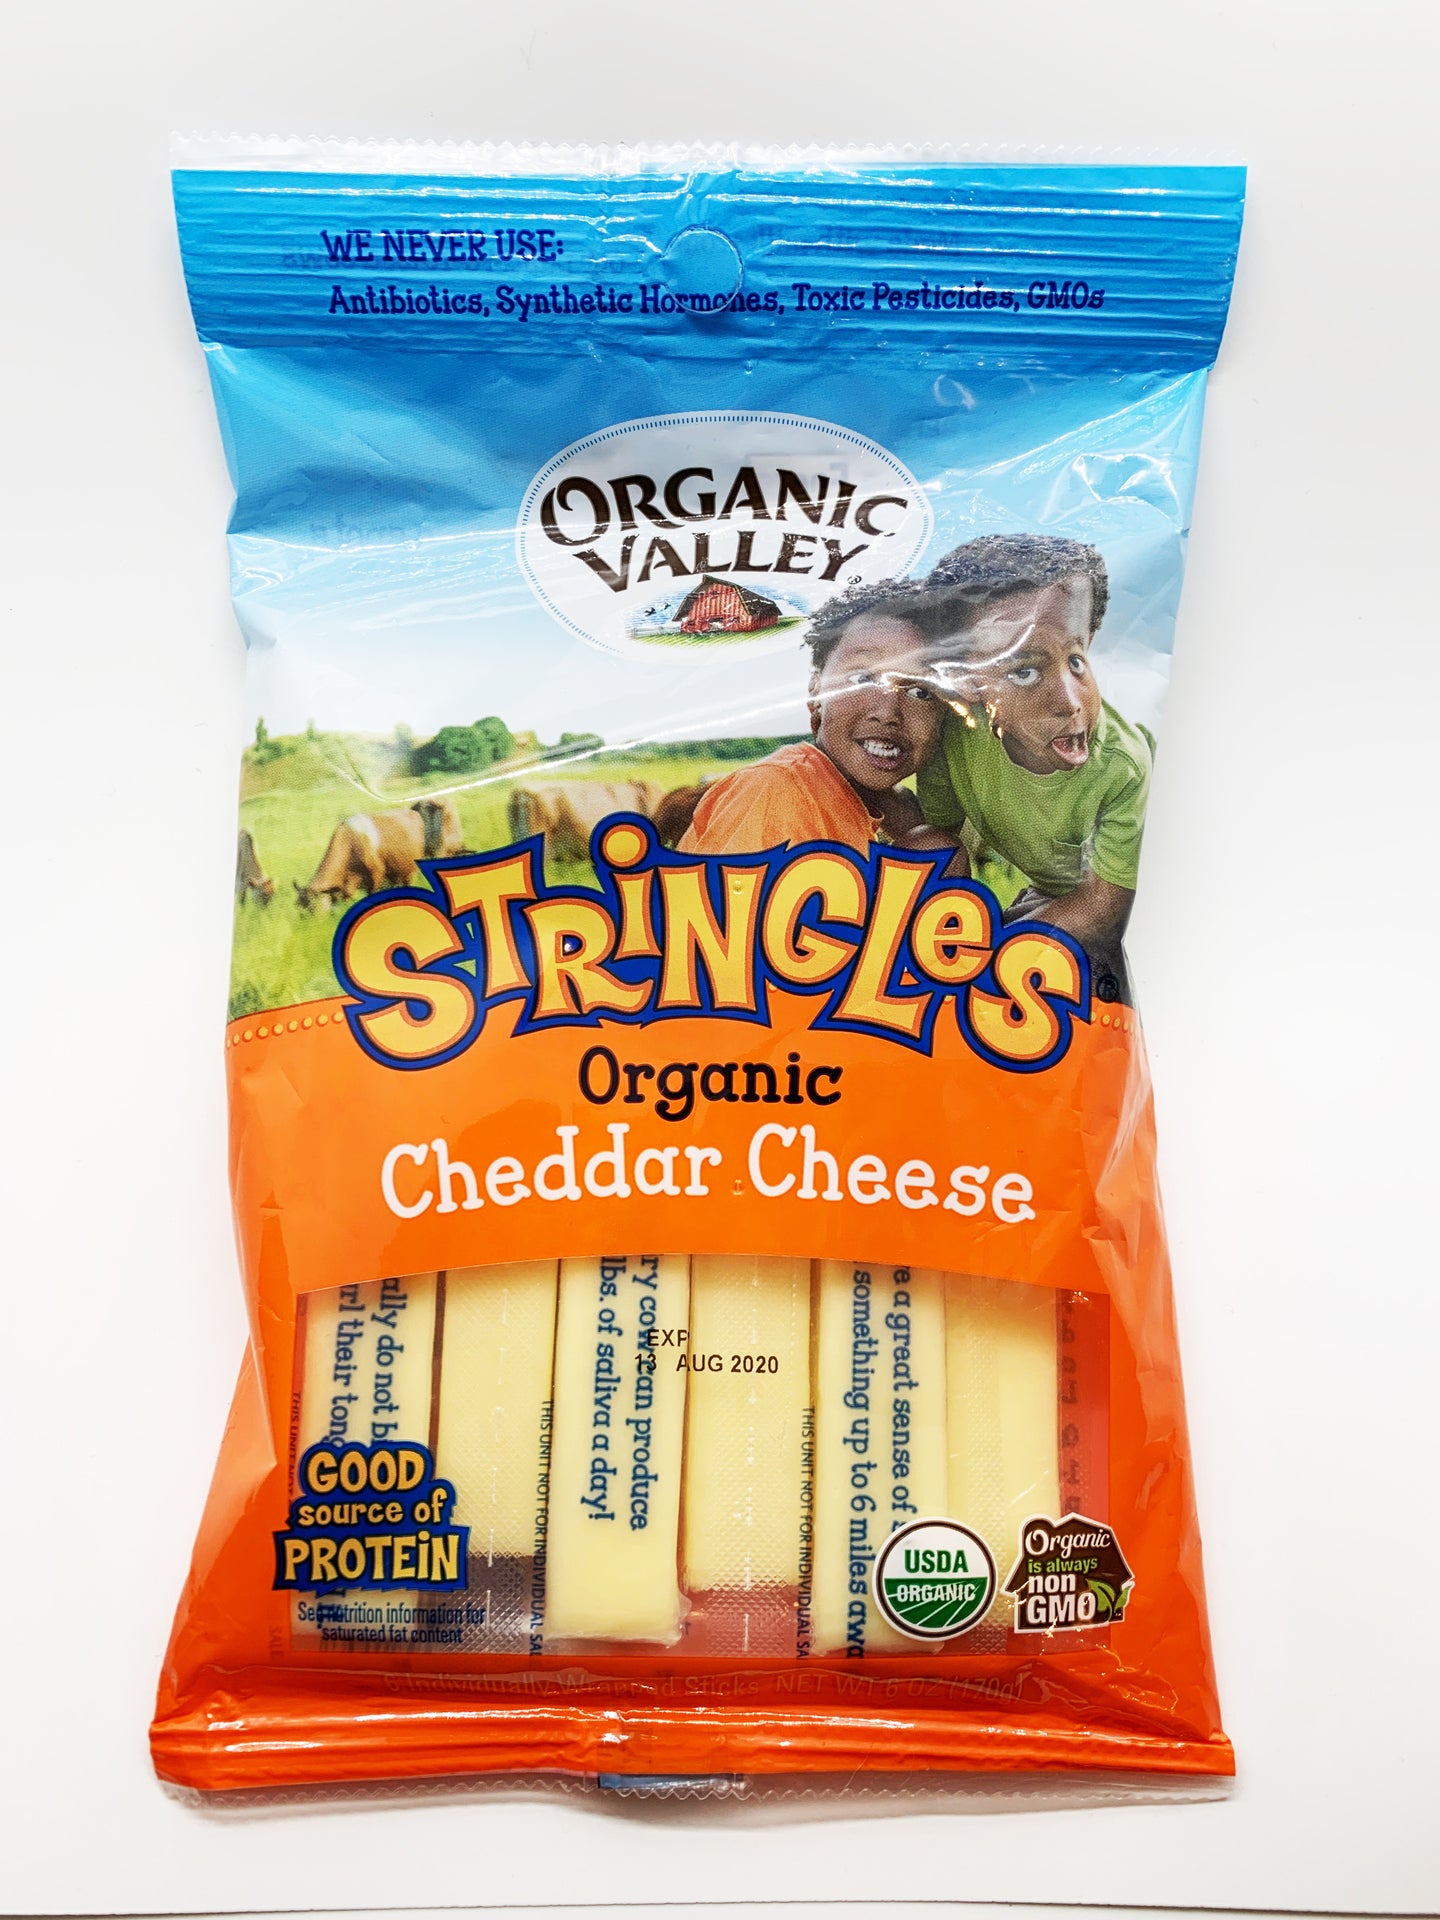 Organic Valley Cheddar Cheese Stringles